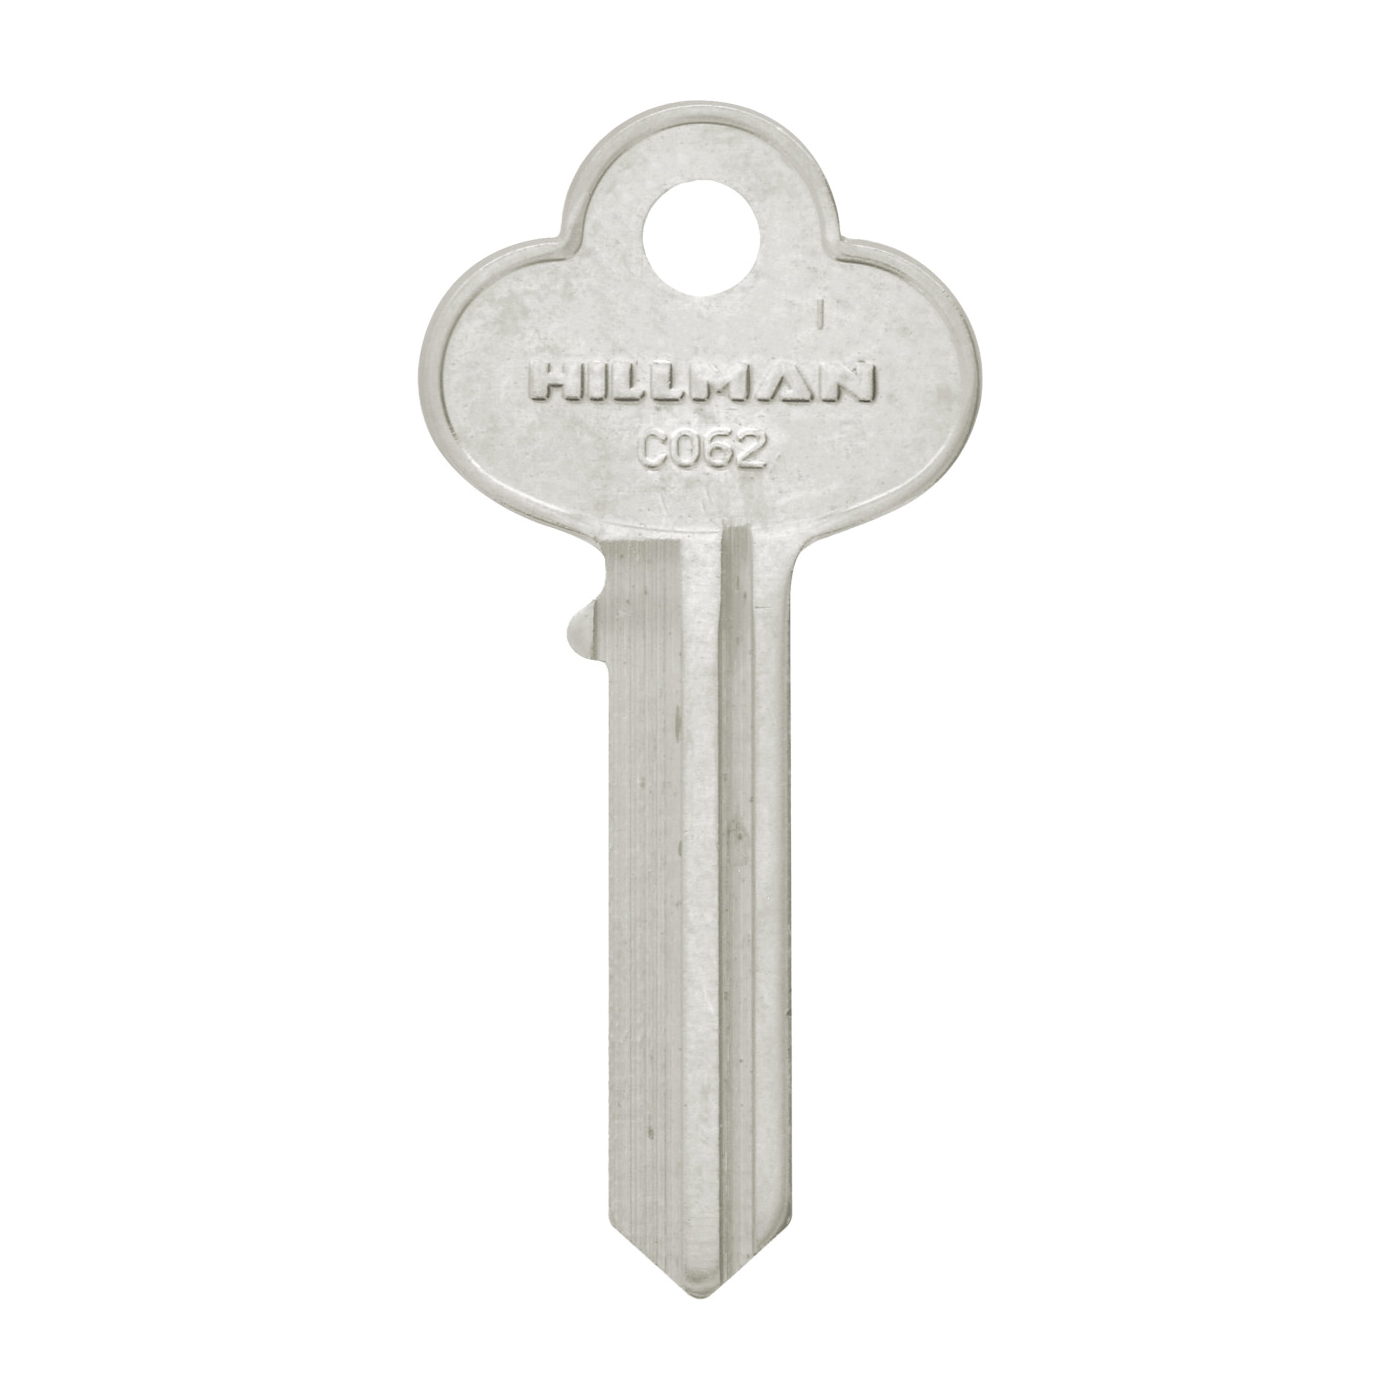 Hillman 441740 Key, For: Corbin Locks